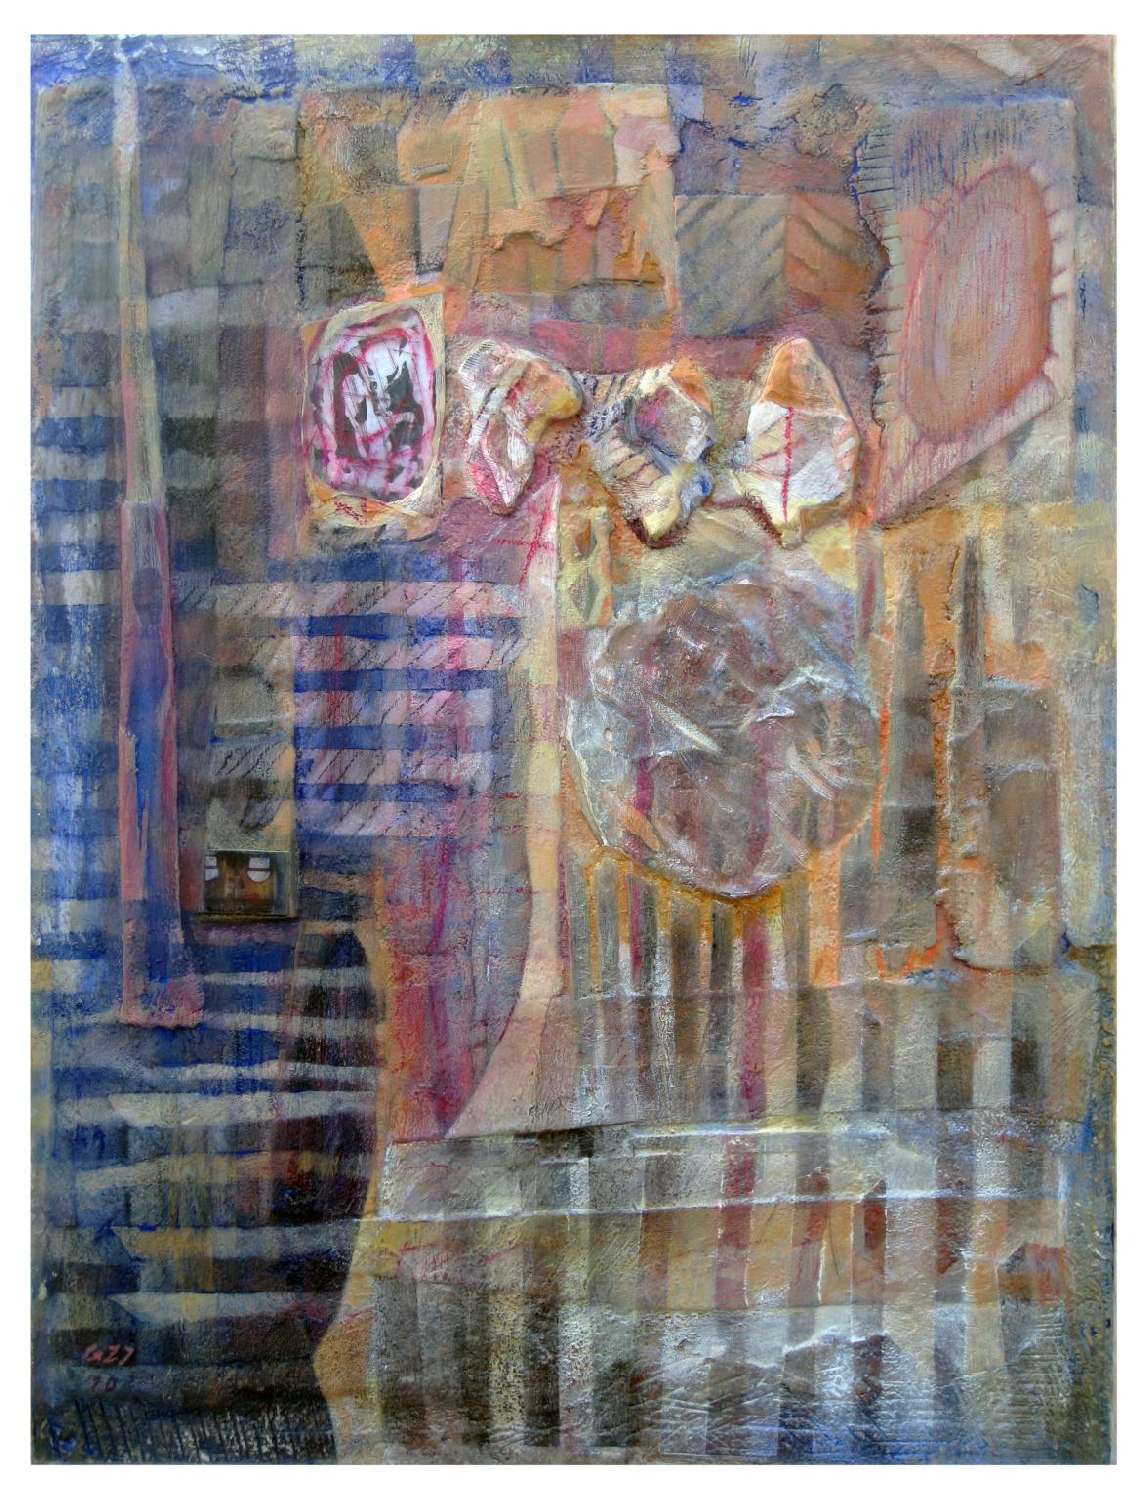 "LÍRICA I" Polvo de mármol, pigmentos y óleo sobre madera 85 x 60 cm. 2010